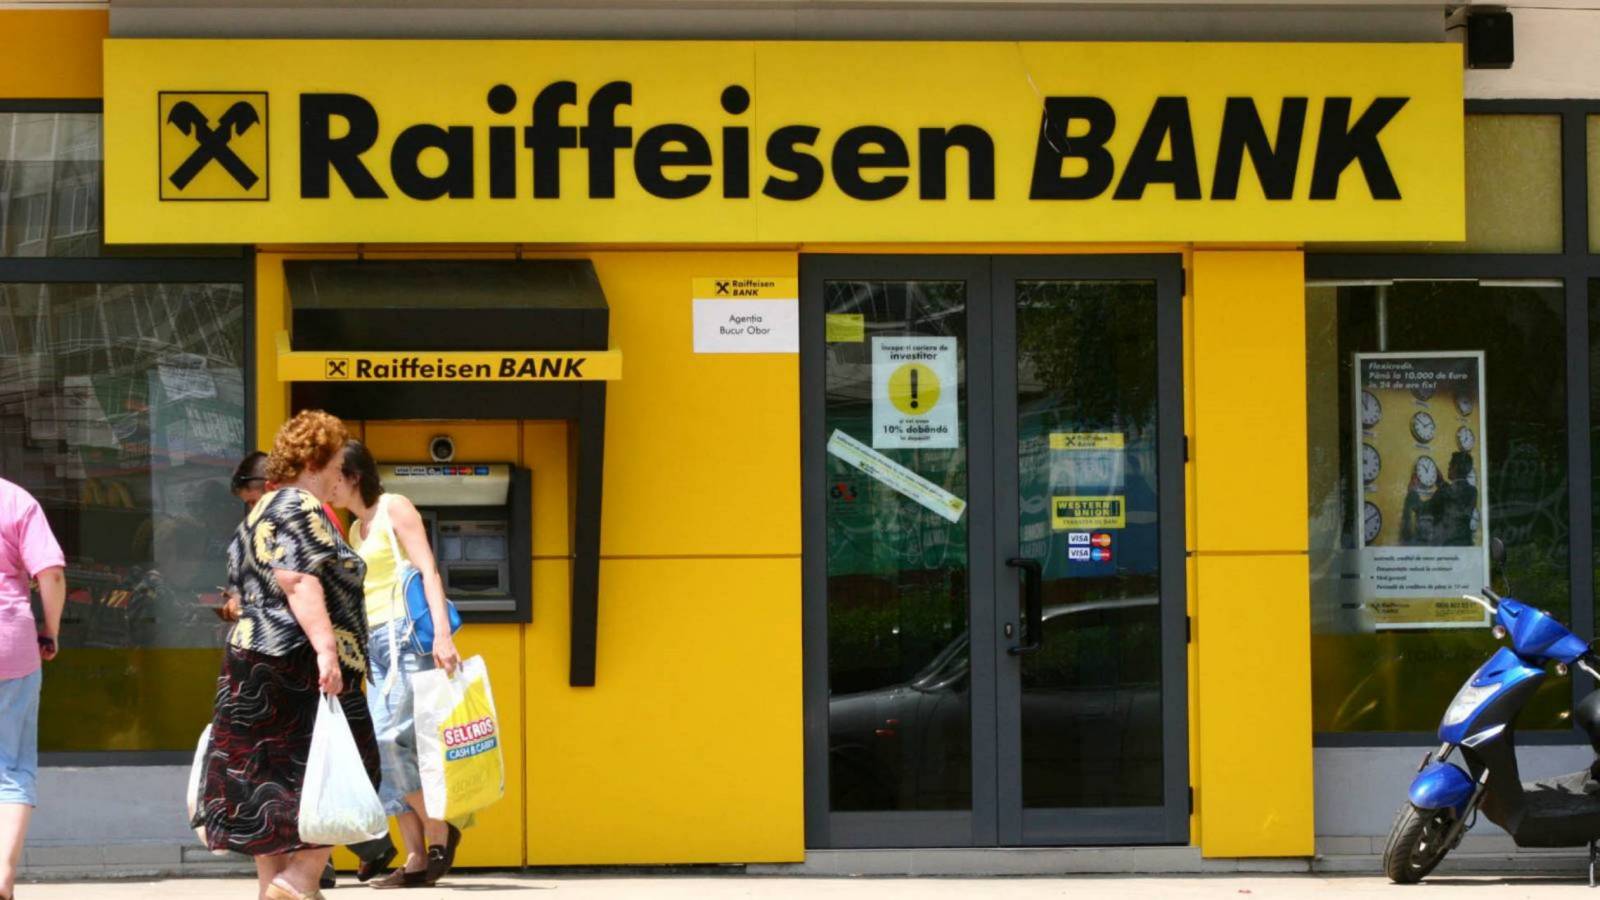 Códigos del banco Raiffeisen